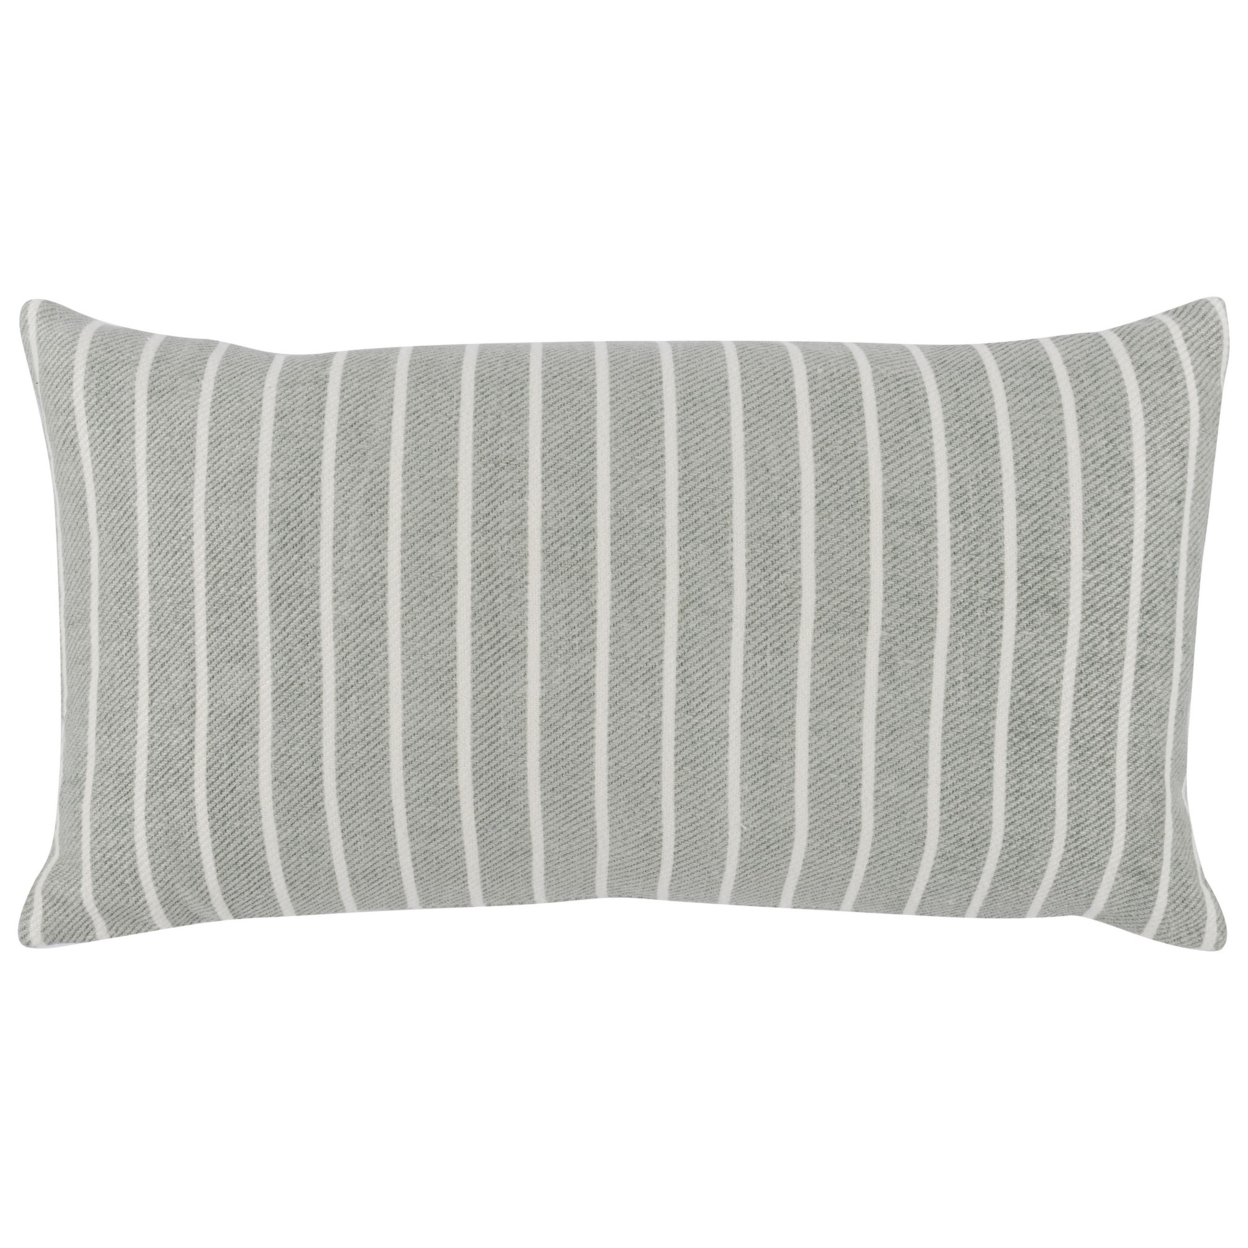 14 X 26 Accent Lumbar Pillow, Down, Striped Pattern, Gray, White Fabric- Saltoro Sherpi